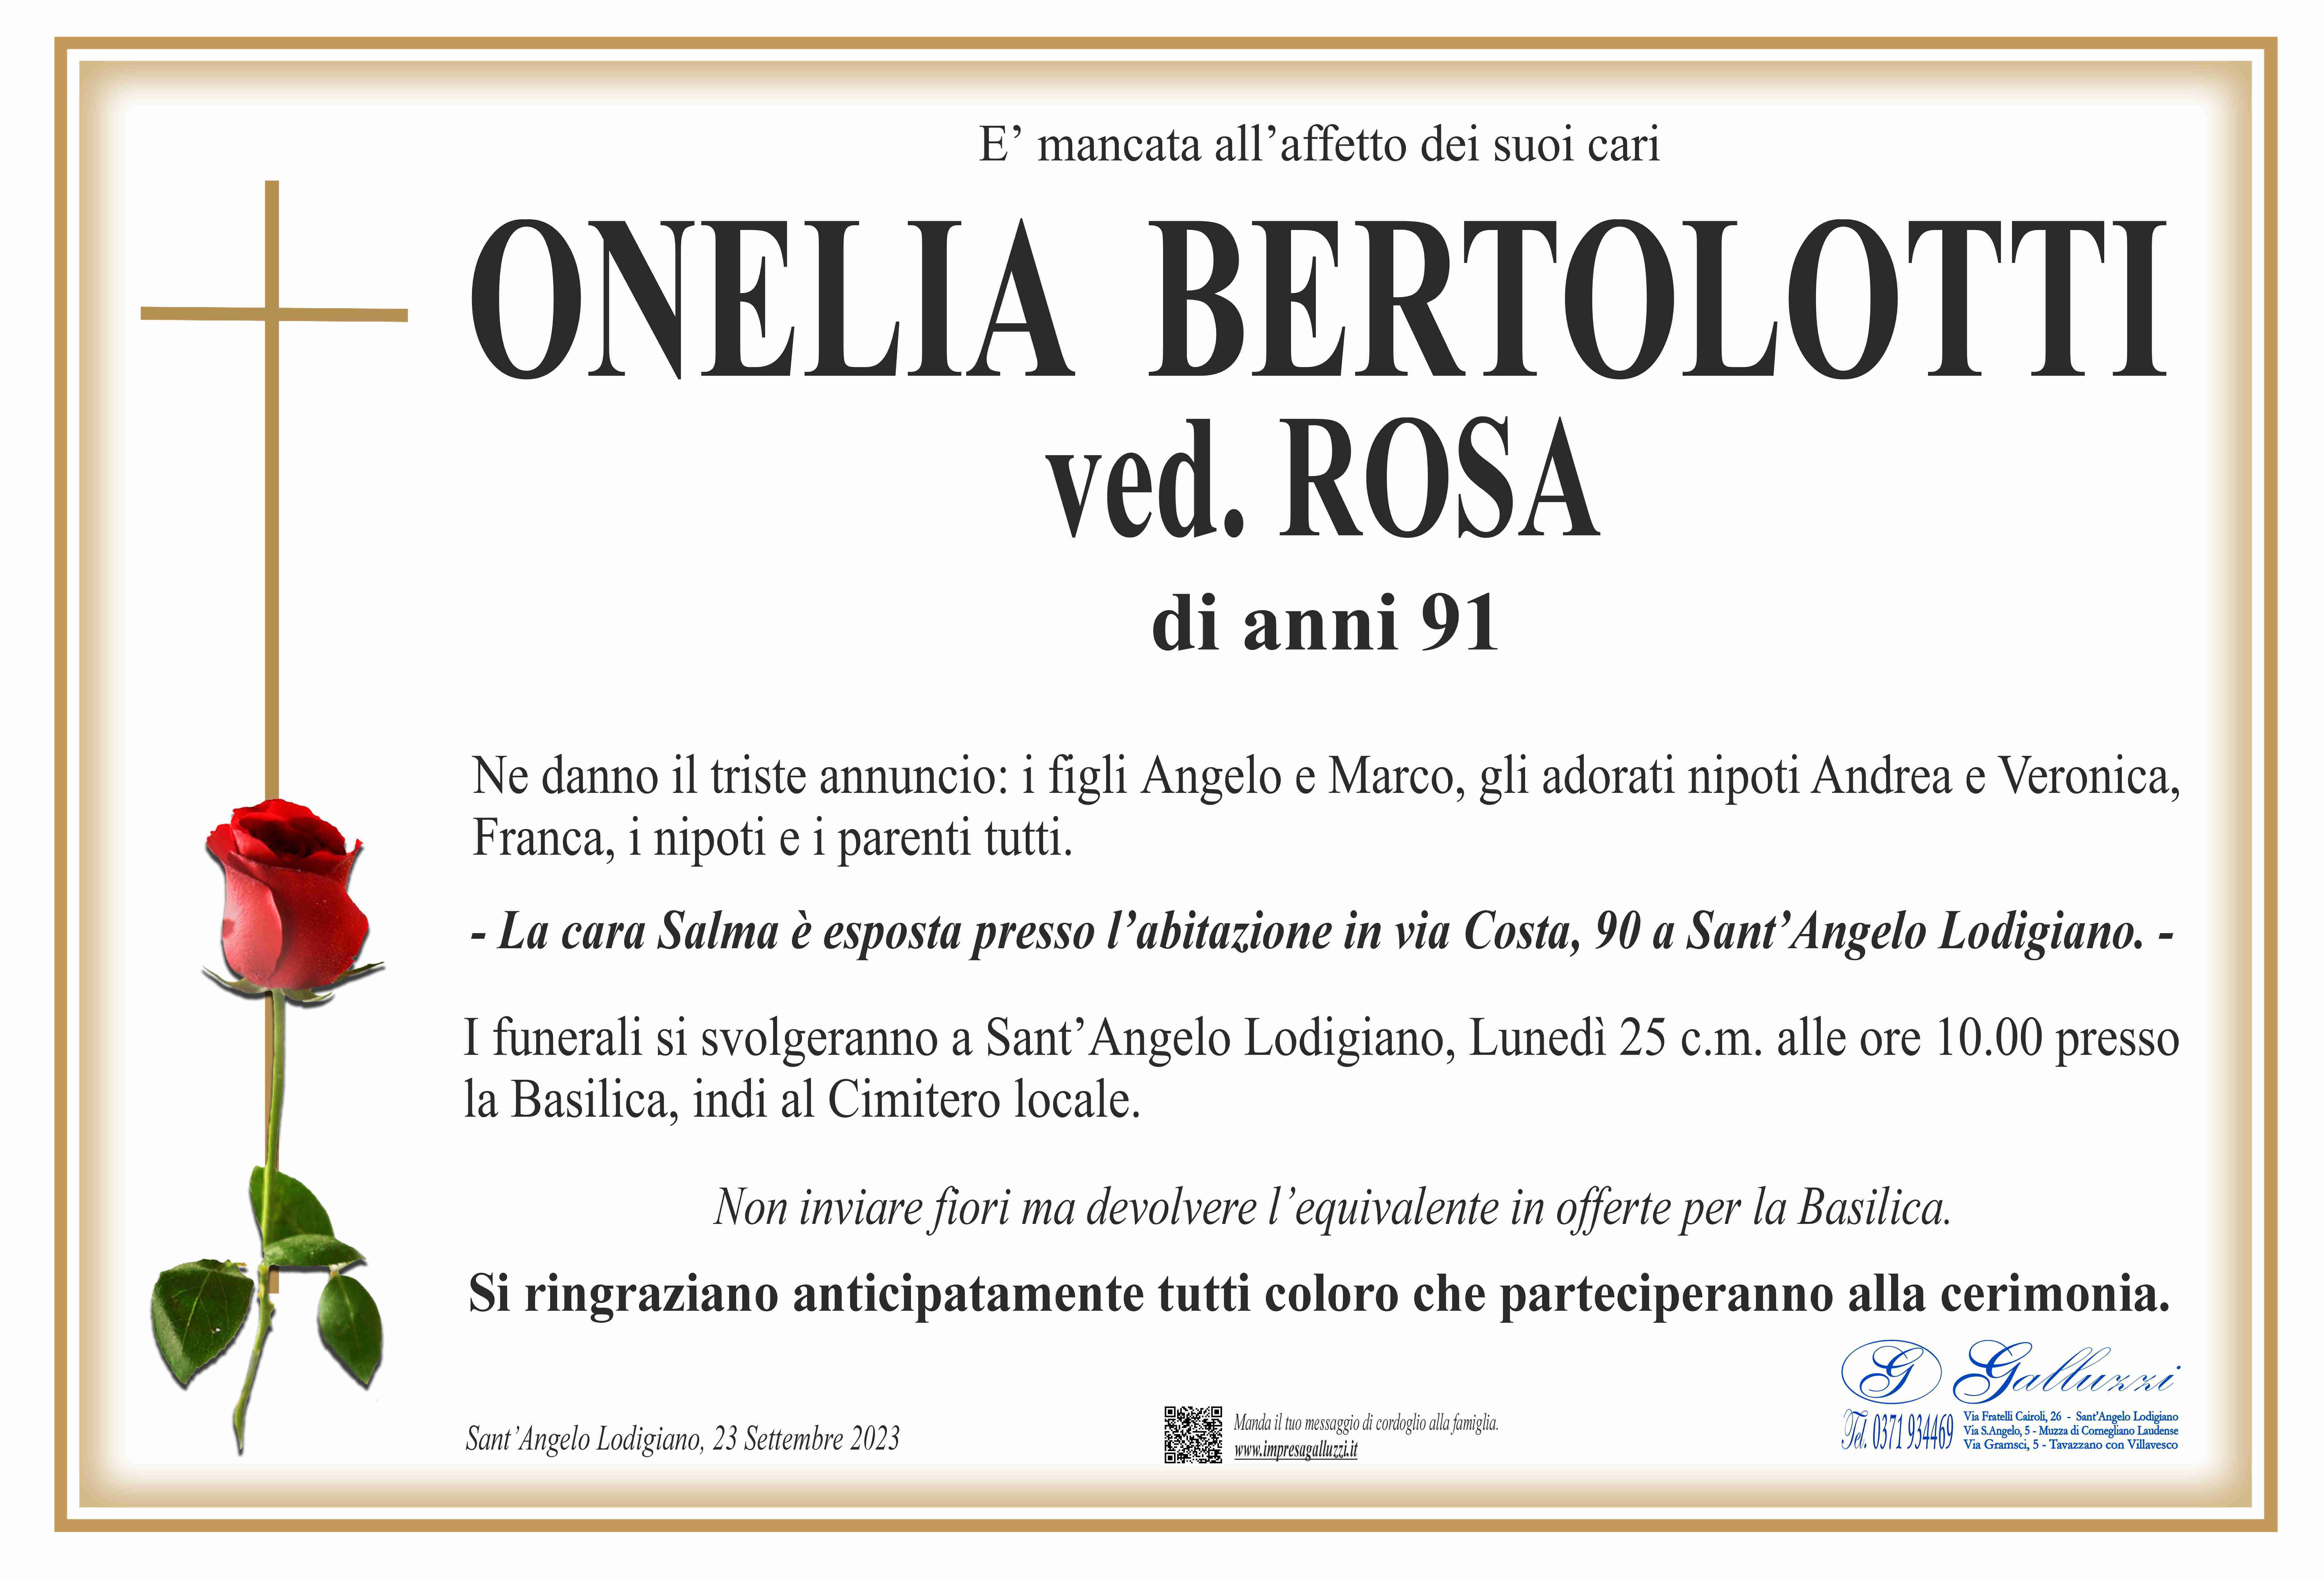 Onelia Bertolotti